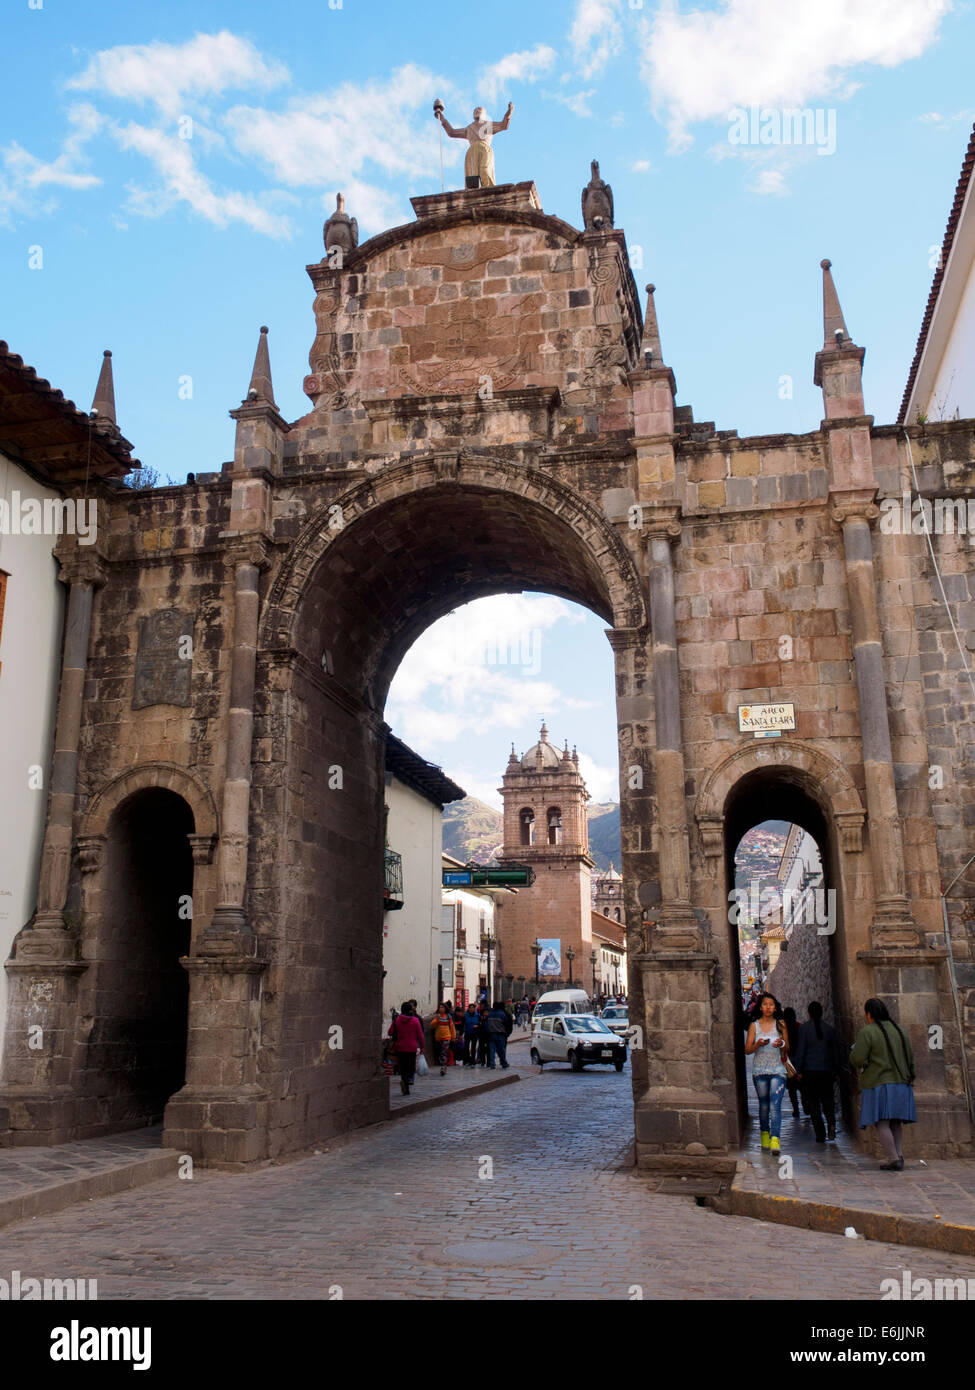 Santa Clara arch and church of San Pedro bell tower - Cusco, Peru Stock Photo